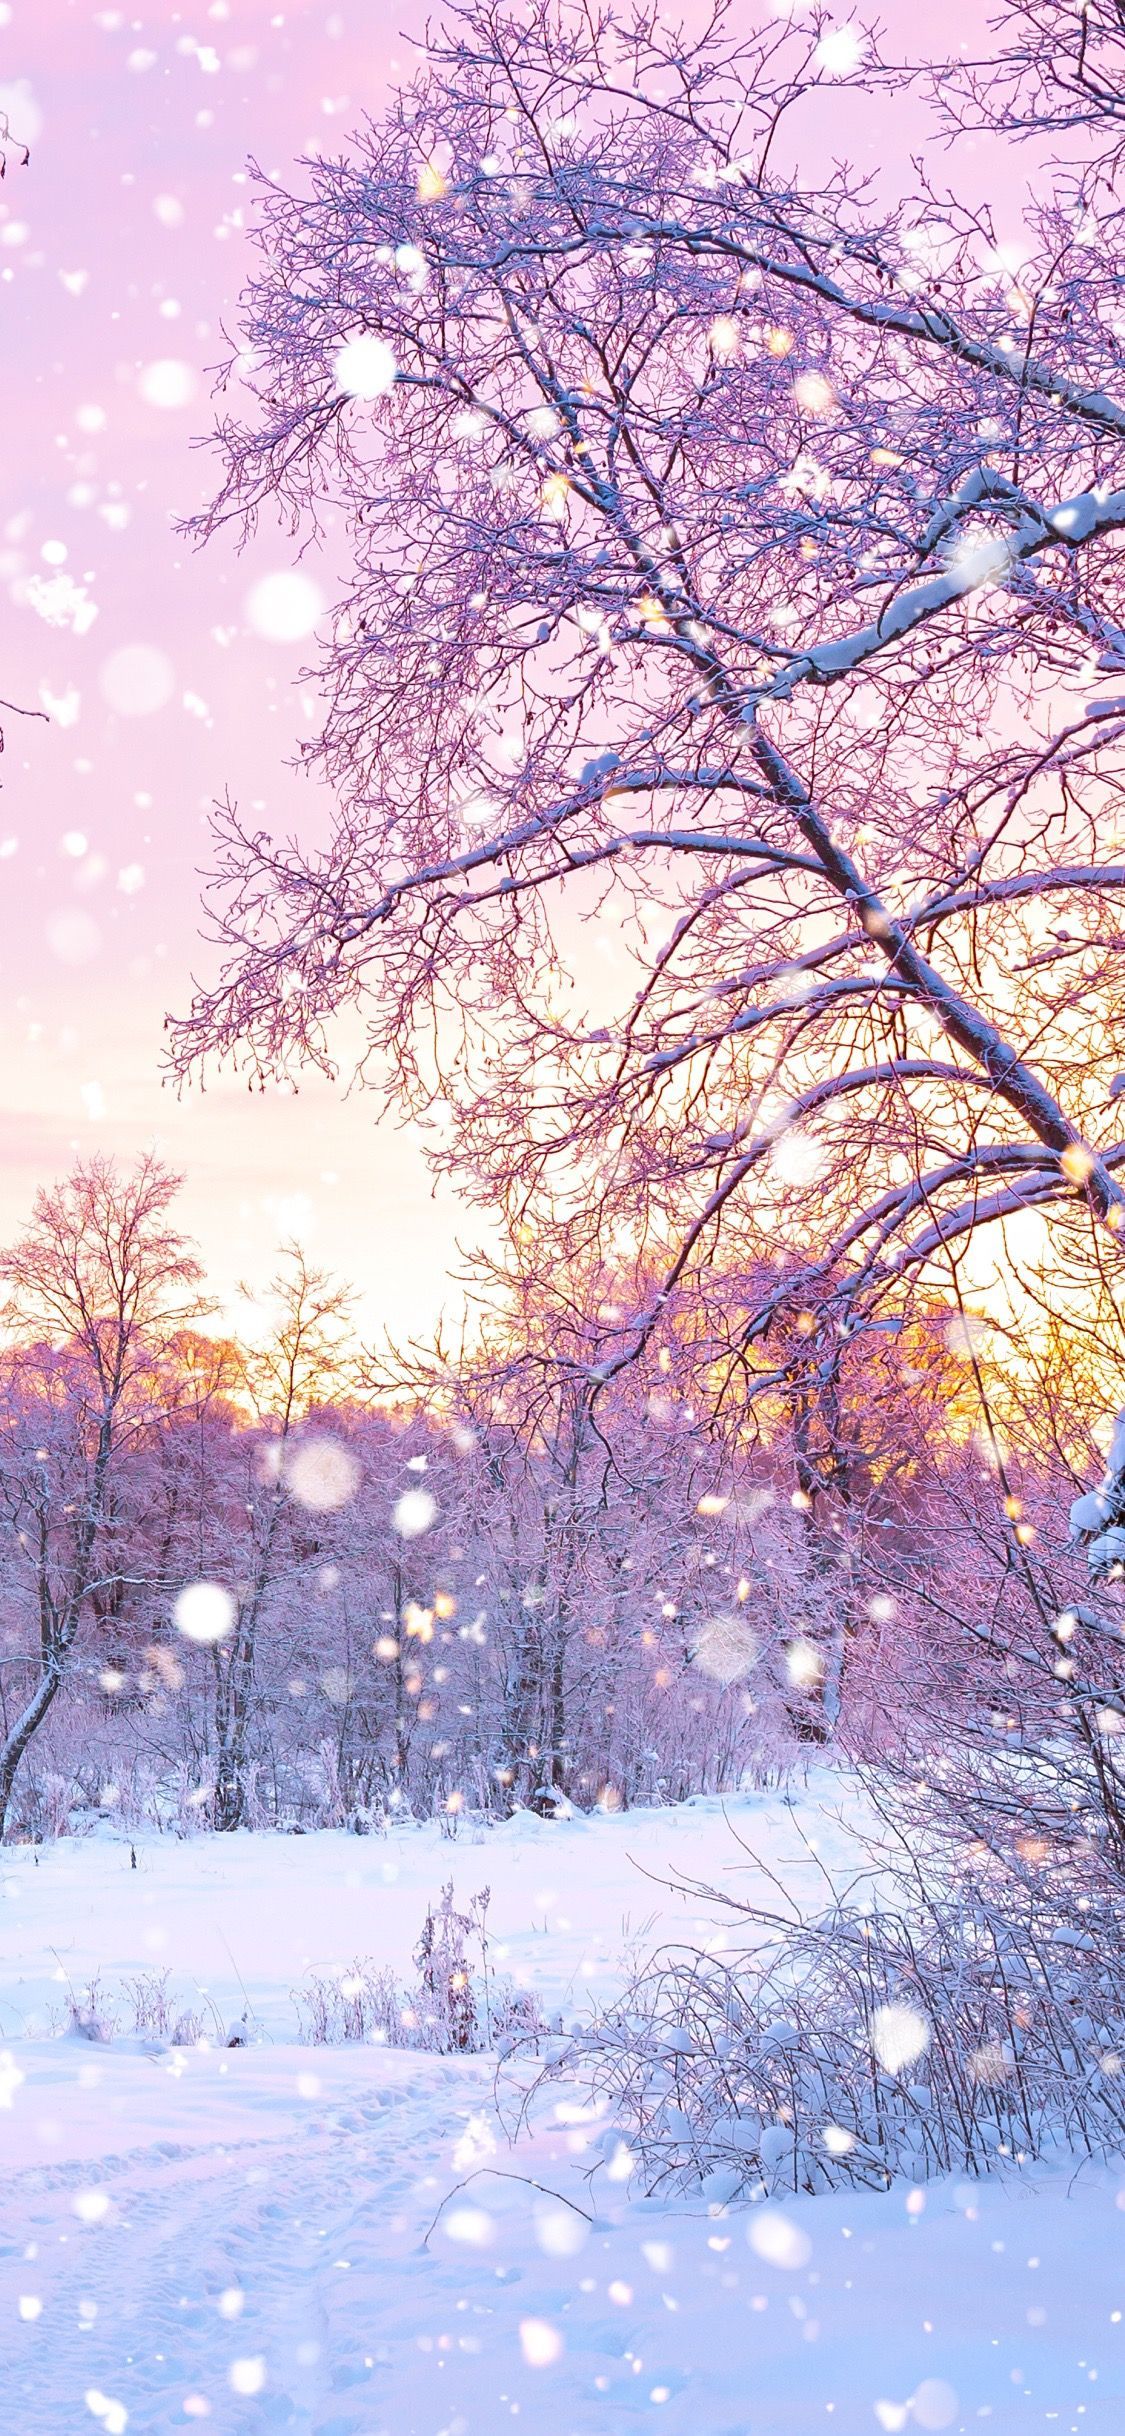 Snow iPhone wallpaper. Winter wallpaper, Beautiful nature wallpaper, Nature wallpaper